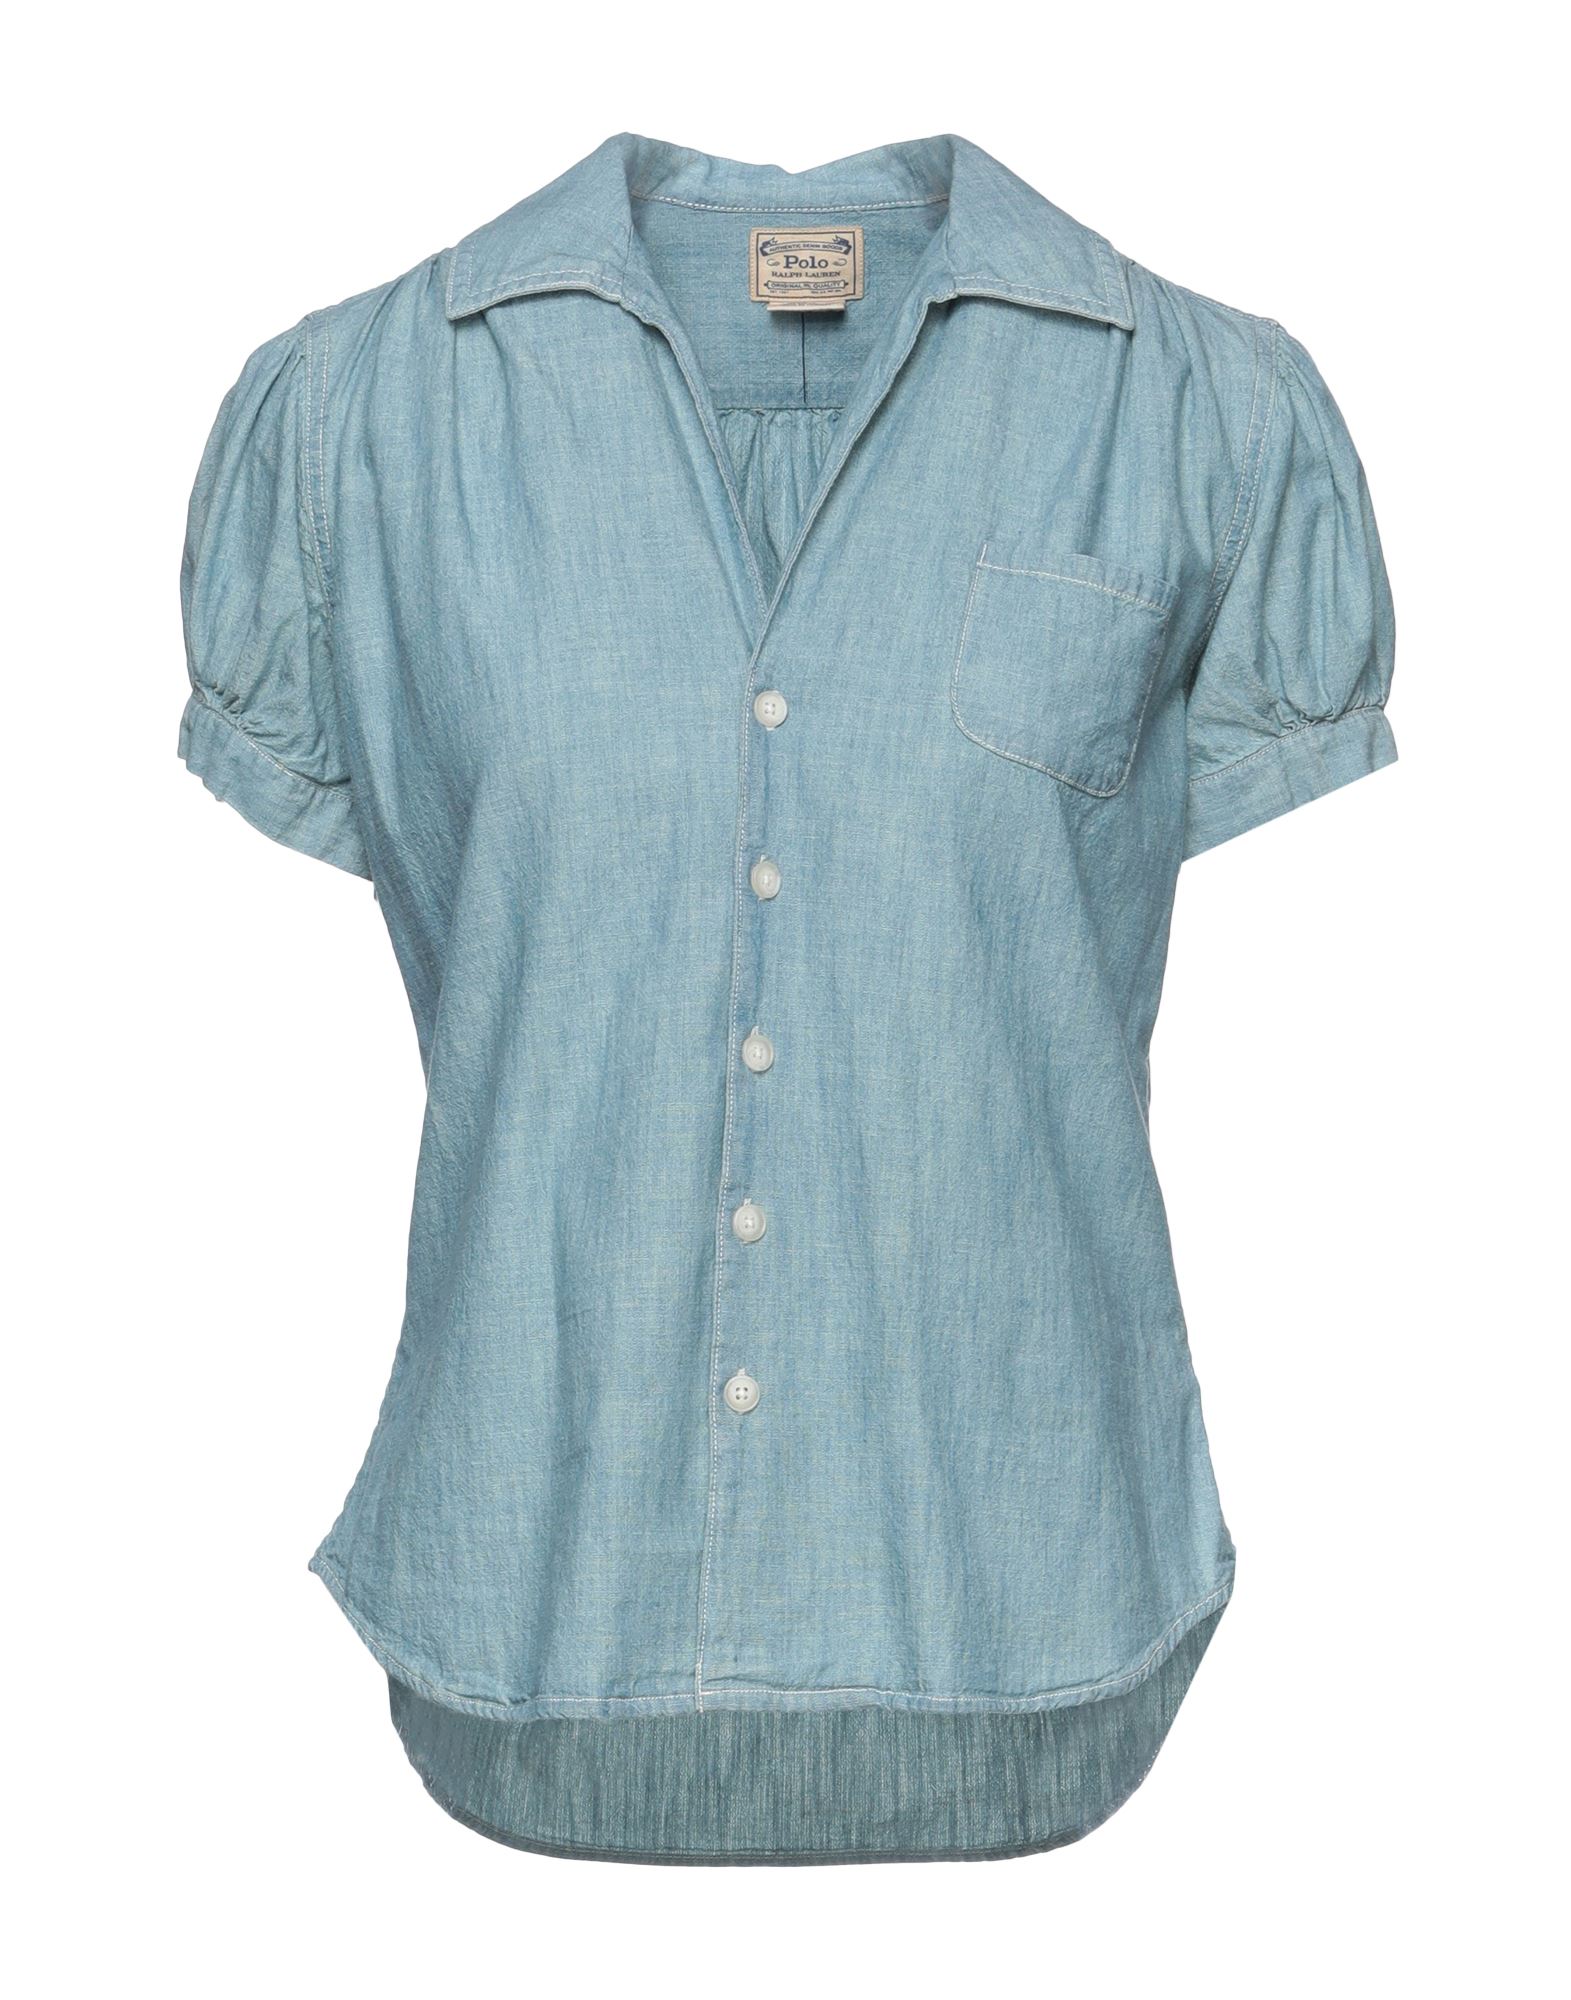 Polo Ralph Lauren Denim Shirts In Blue